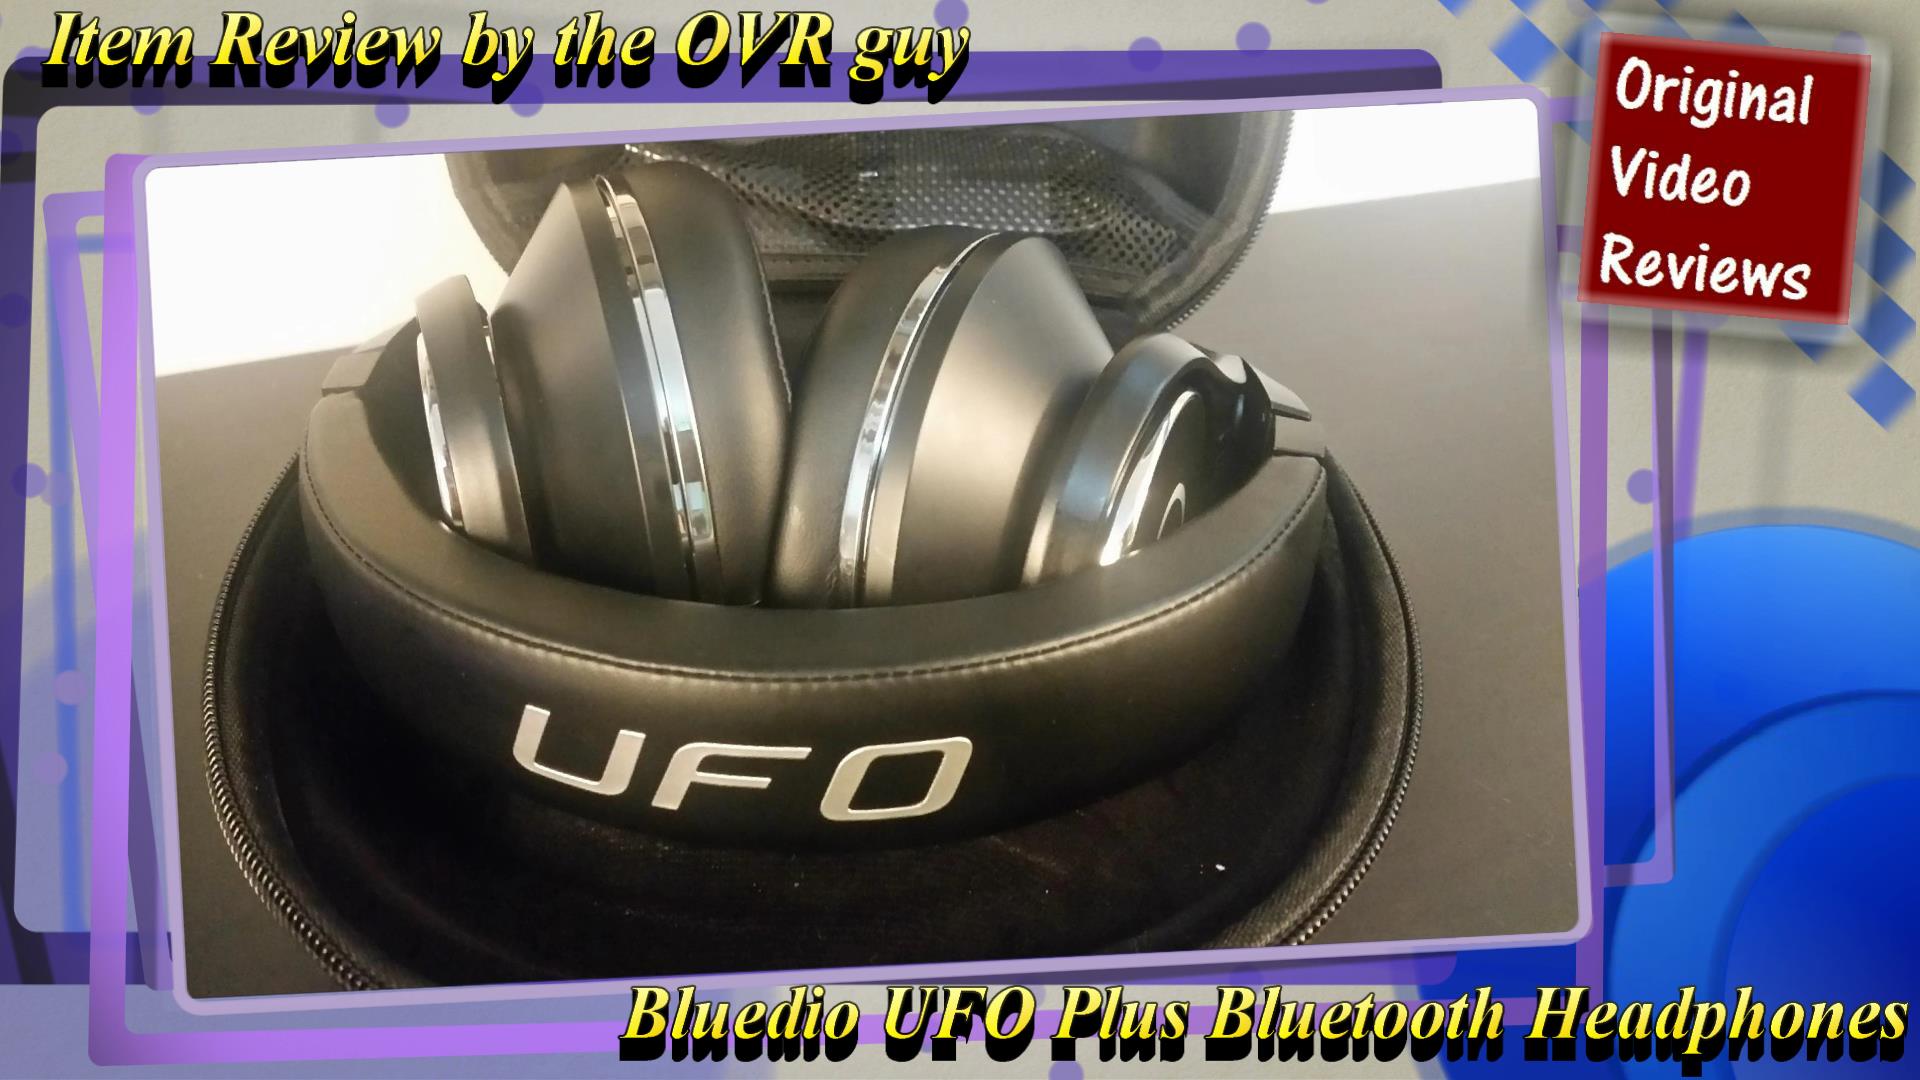 Bluedio UFO Plus Bluetooth Headphones Review (Thumbnail)